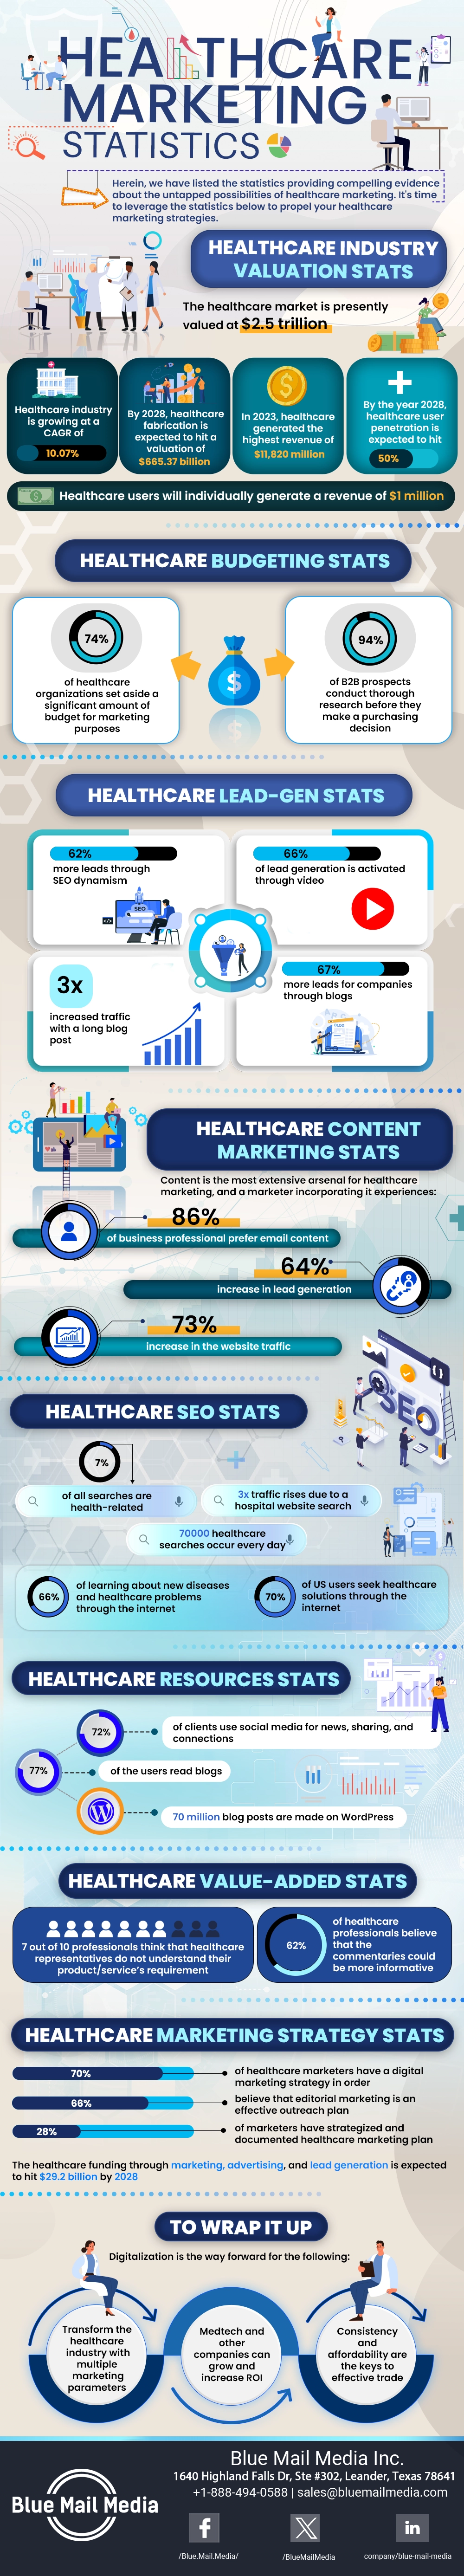 healthcare marketing stats